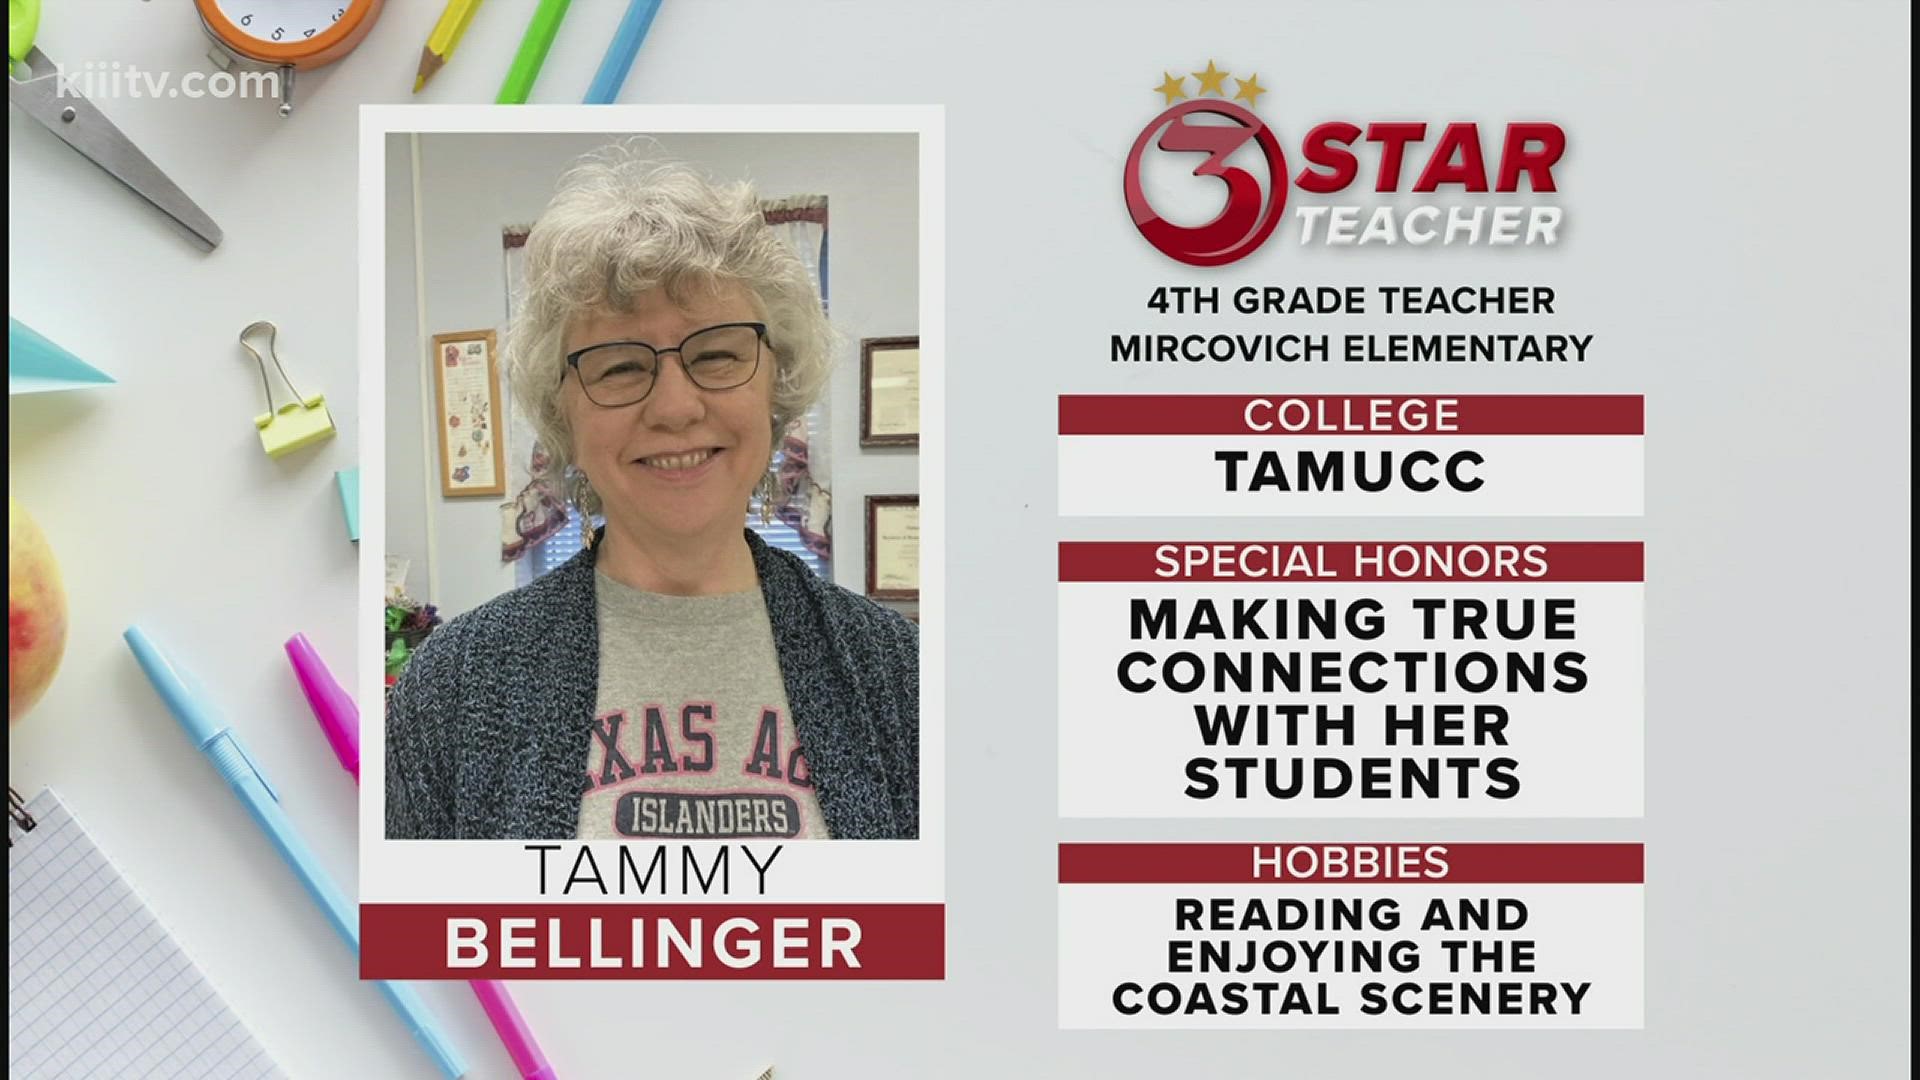 Tammy is a 4th grade teacher at Mircovich Elementary School in Ingleside.